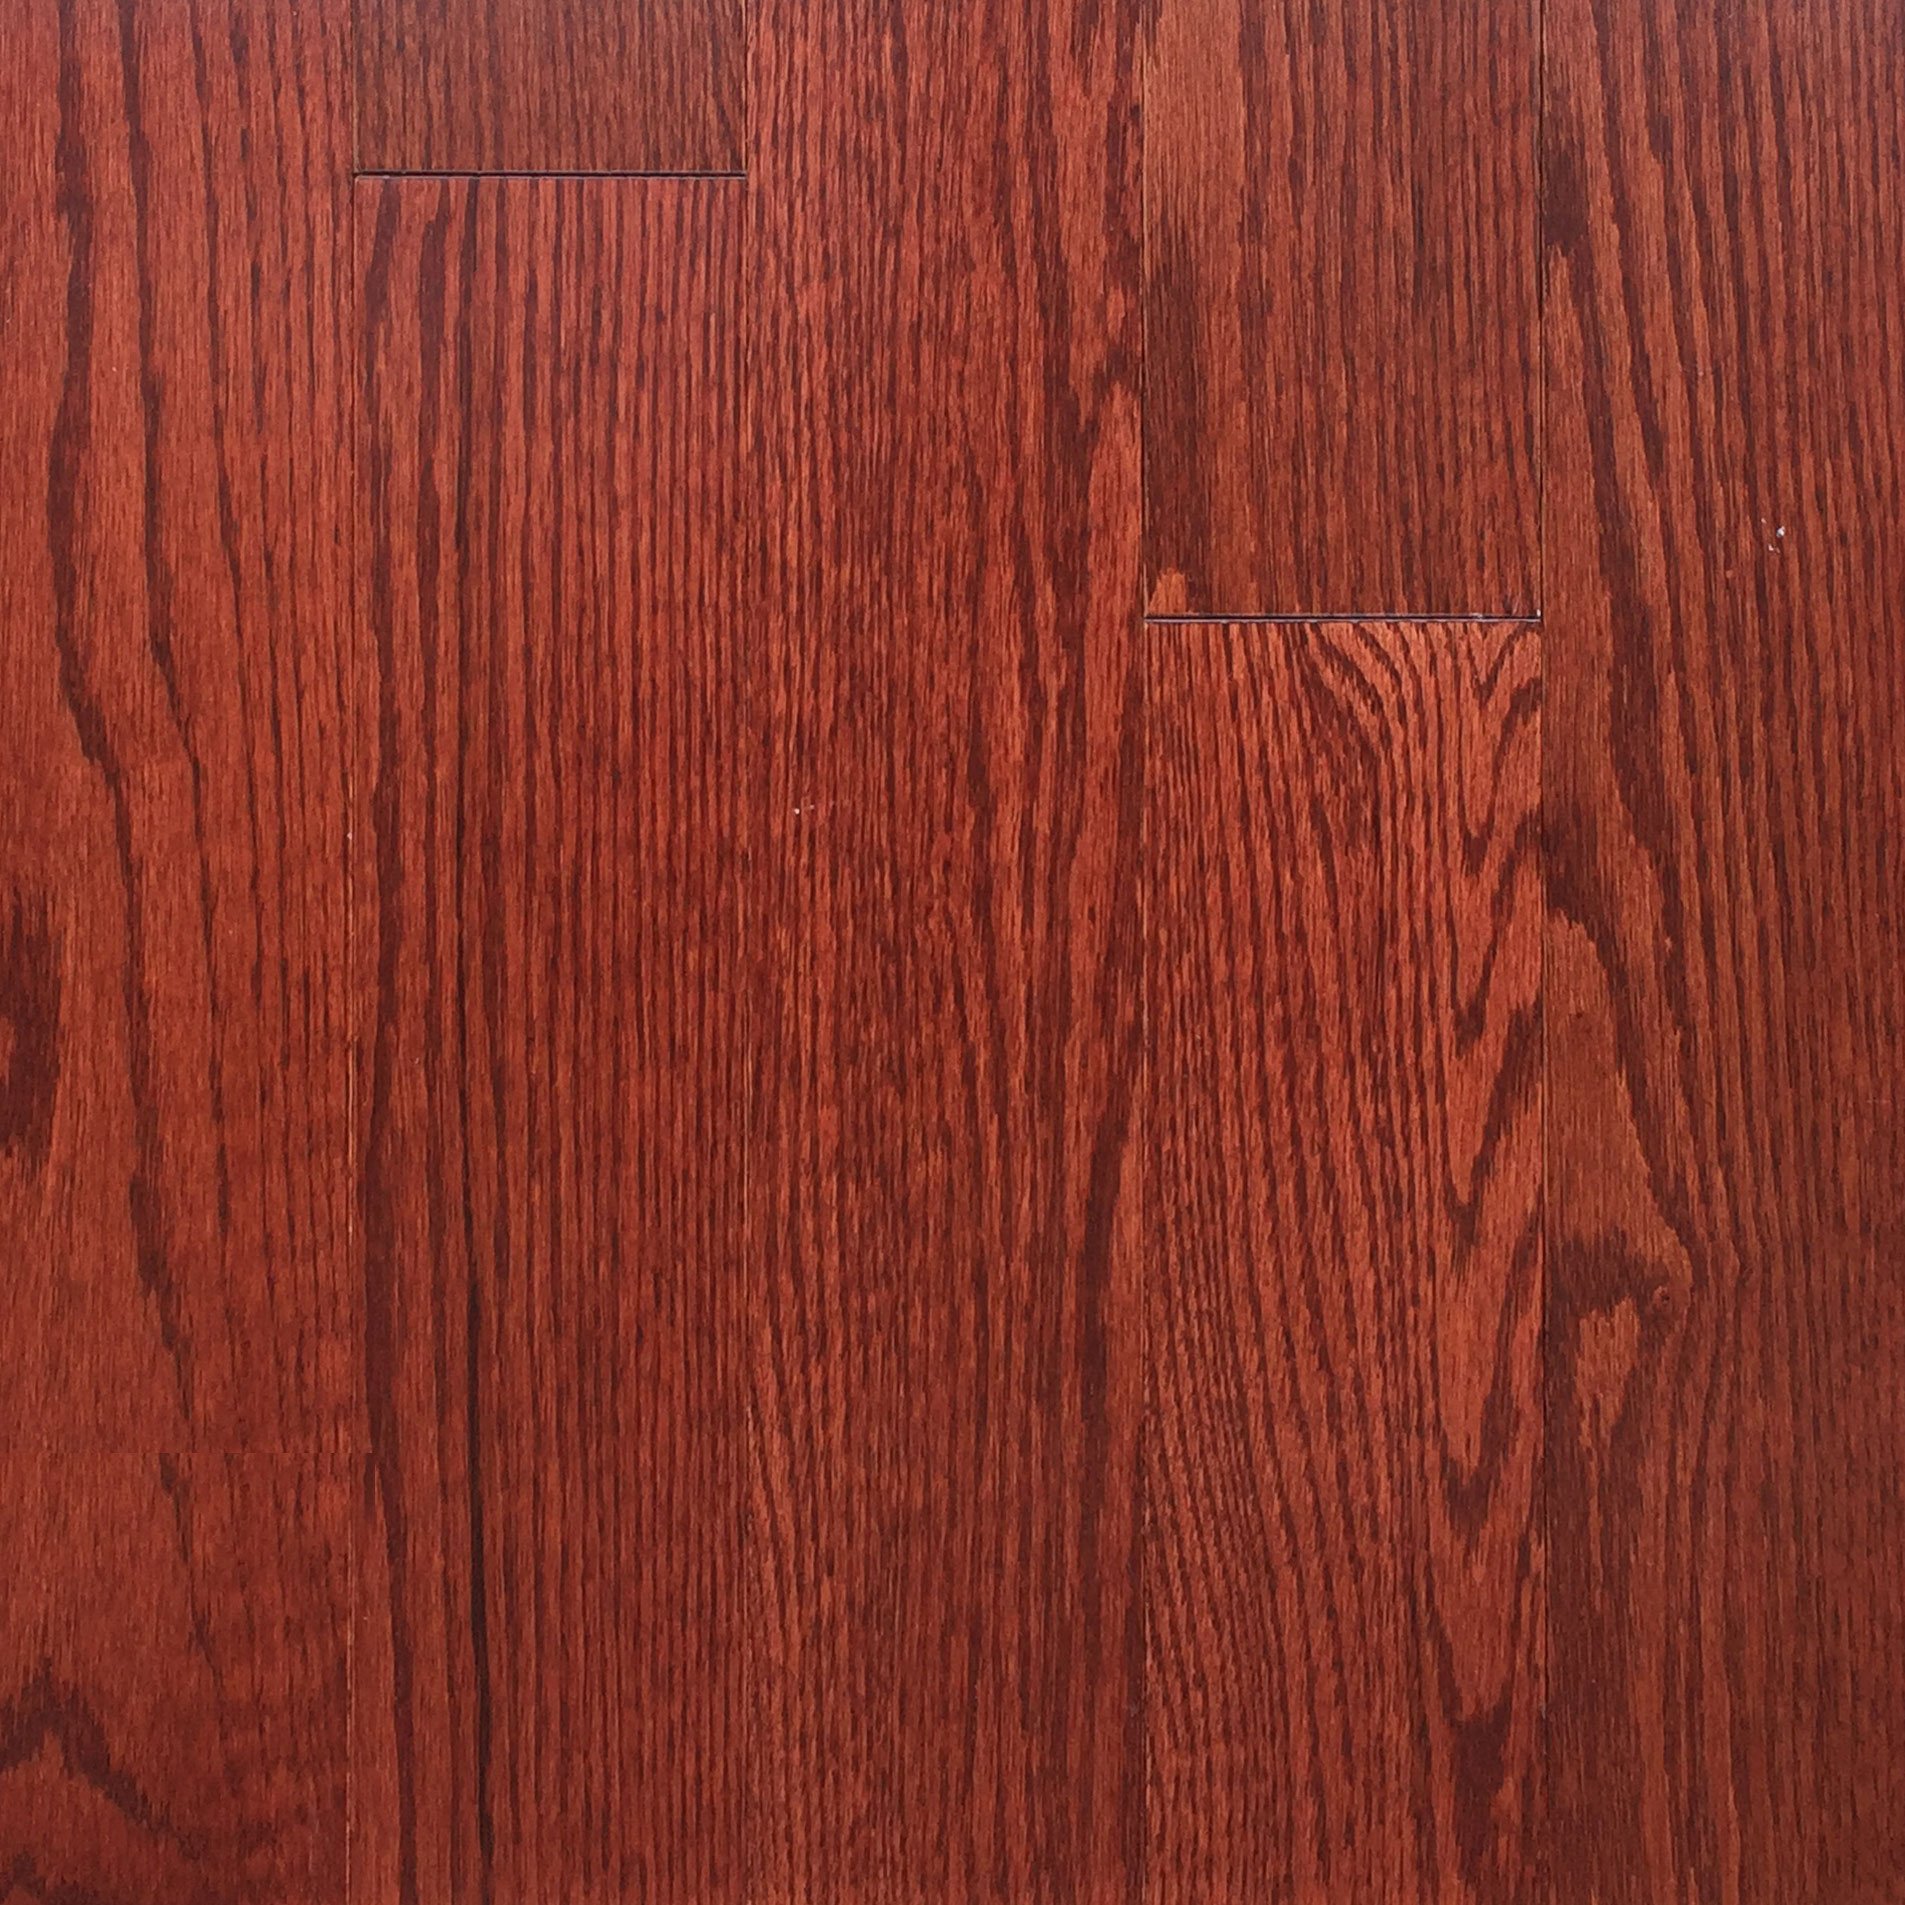 Red Oak Select Better Uphill Cherry, Select Oak Hardwood Flooring